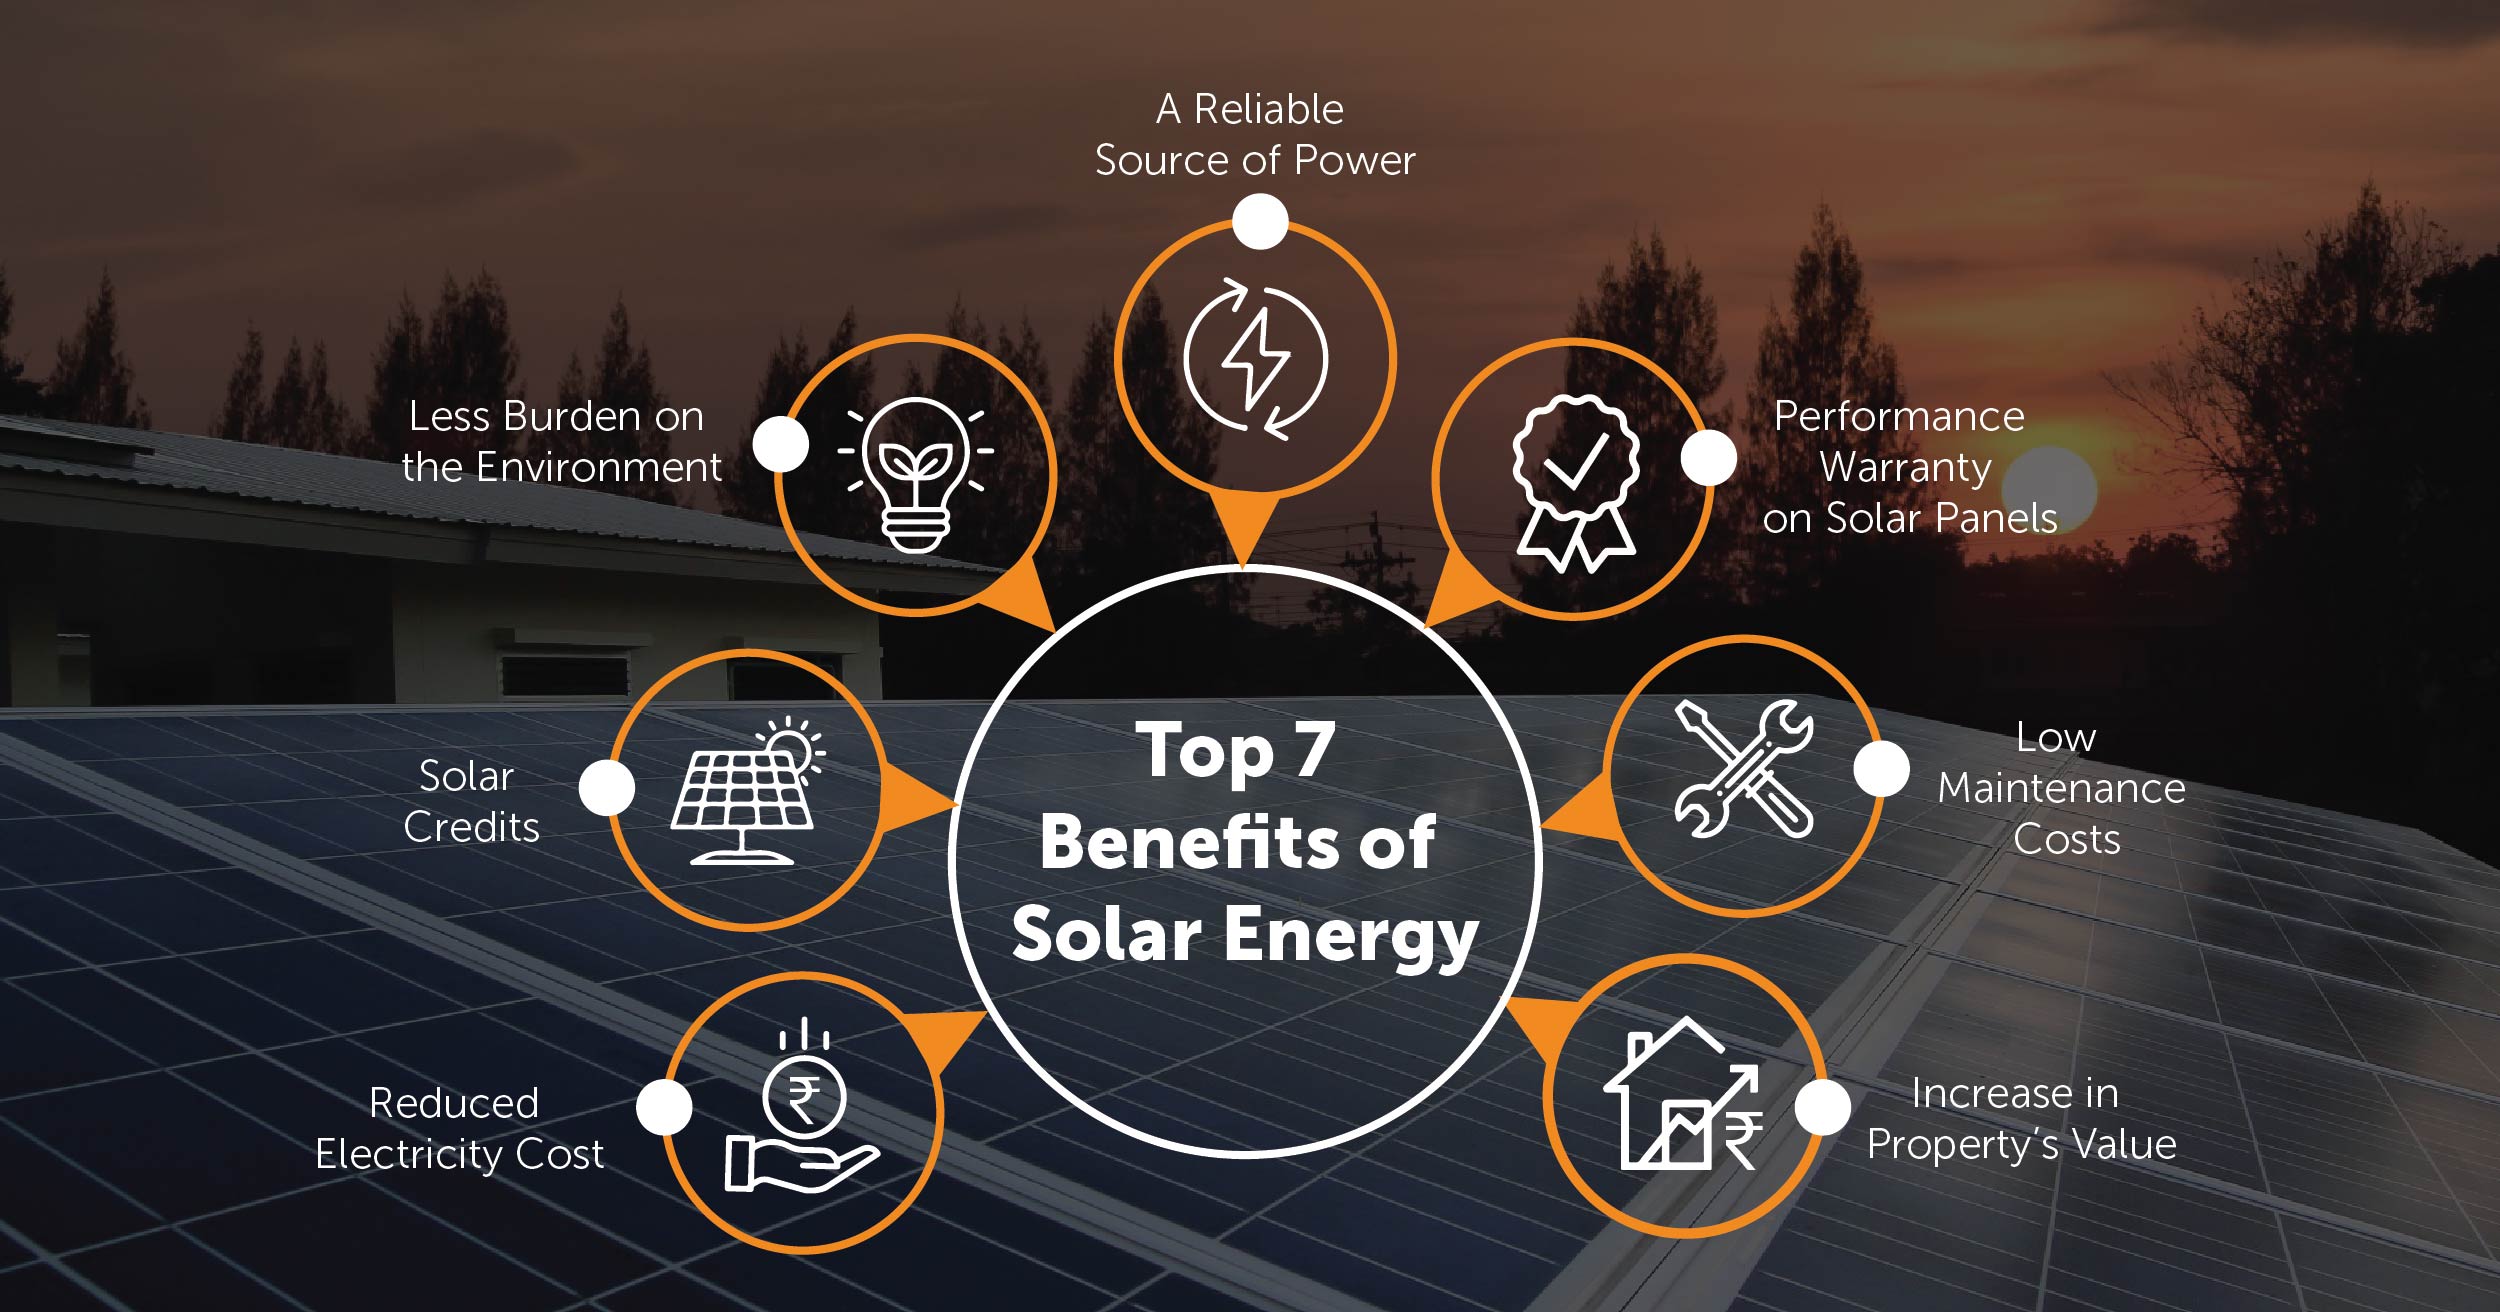 Top 7 Benefits of Solar Energy